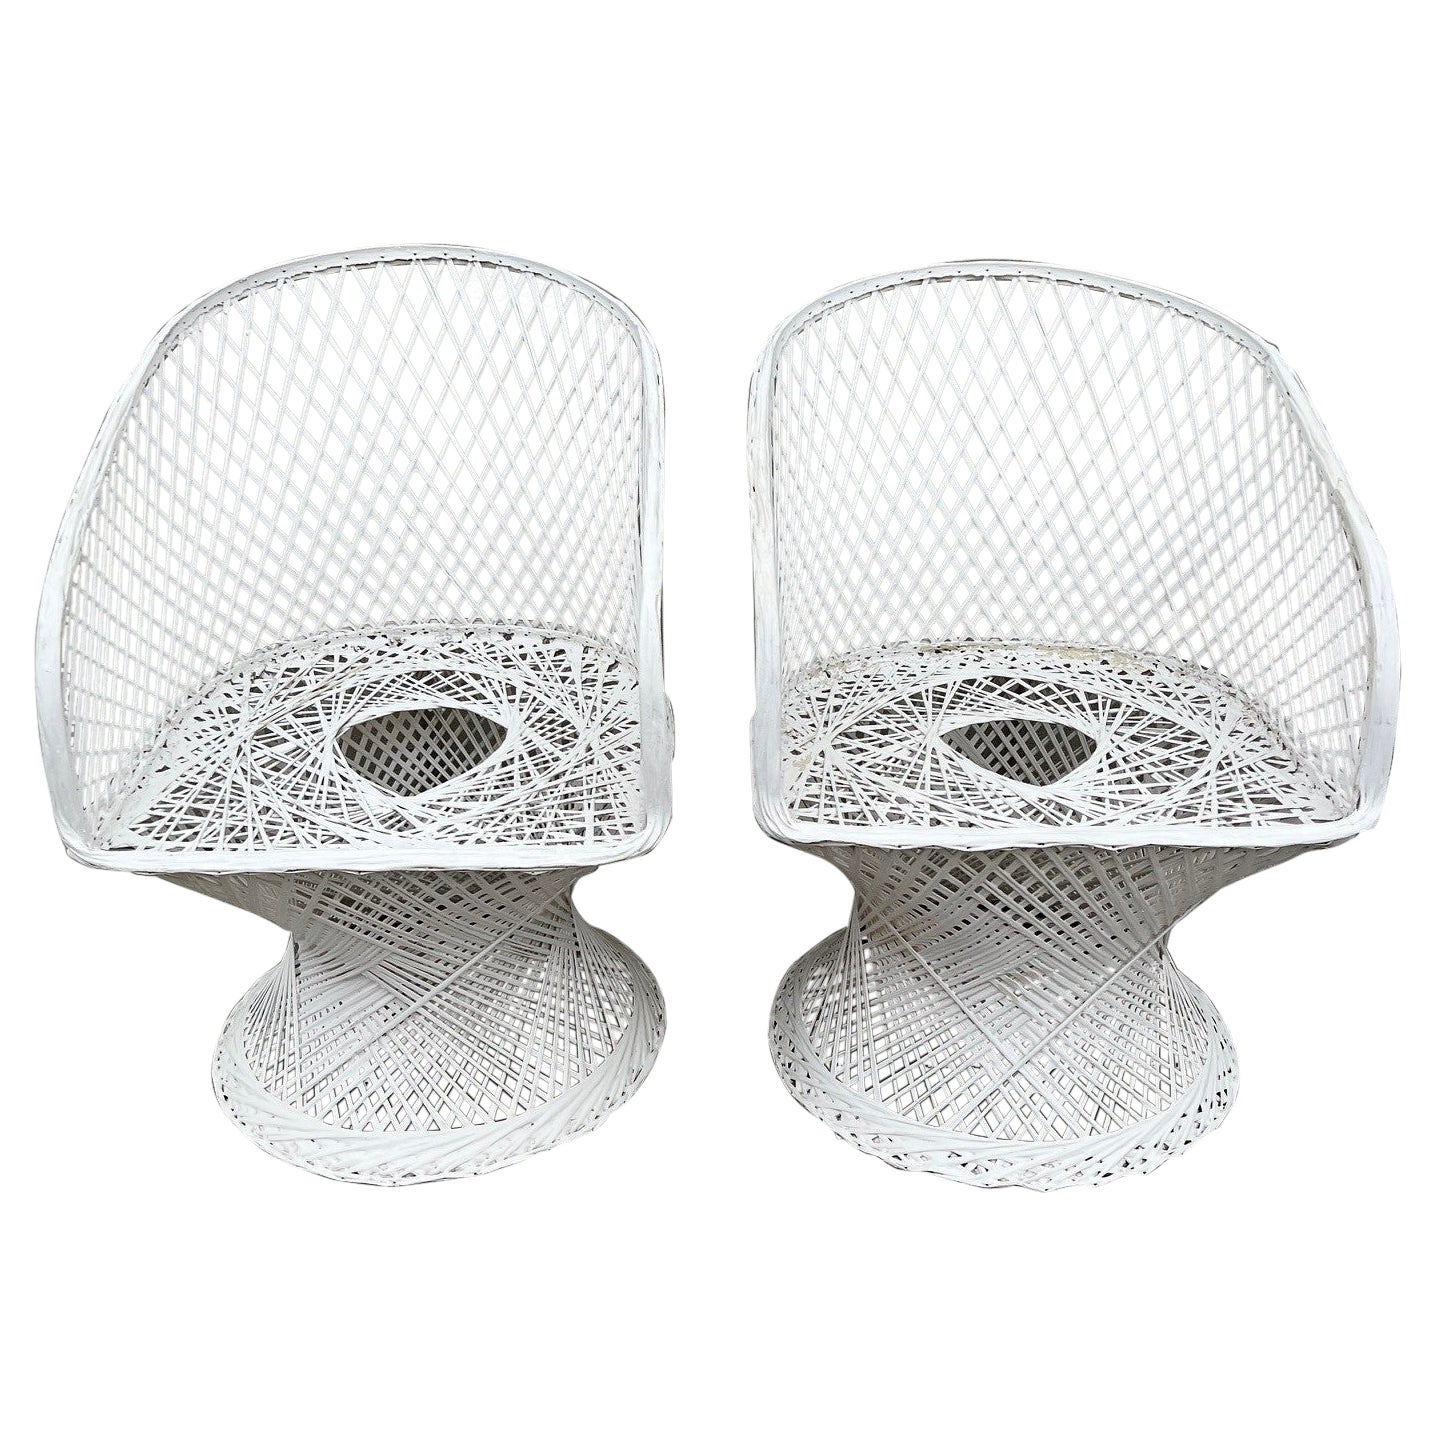 Pair of Mid Century Modern Spun Fiberglass Chairs by Russell Woodard 1960-1969 For Sale